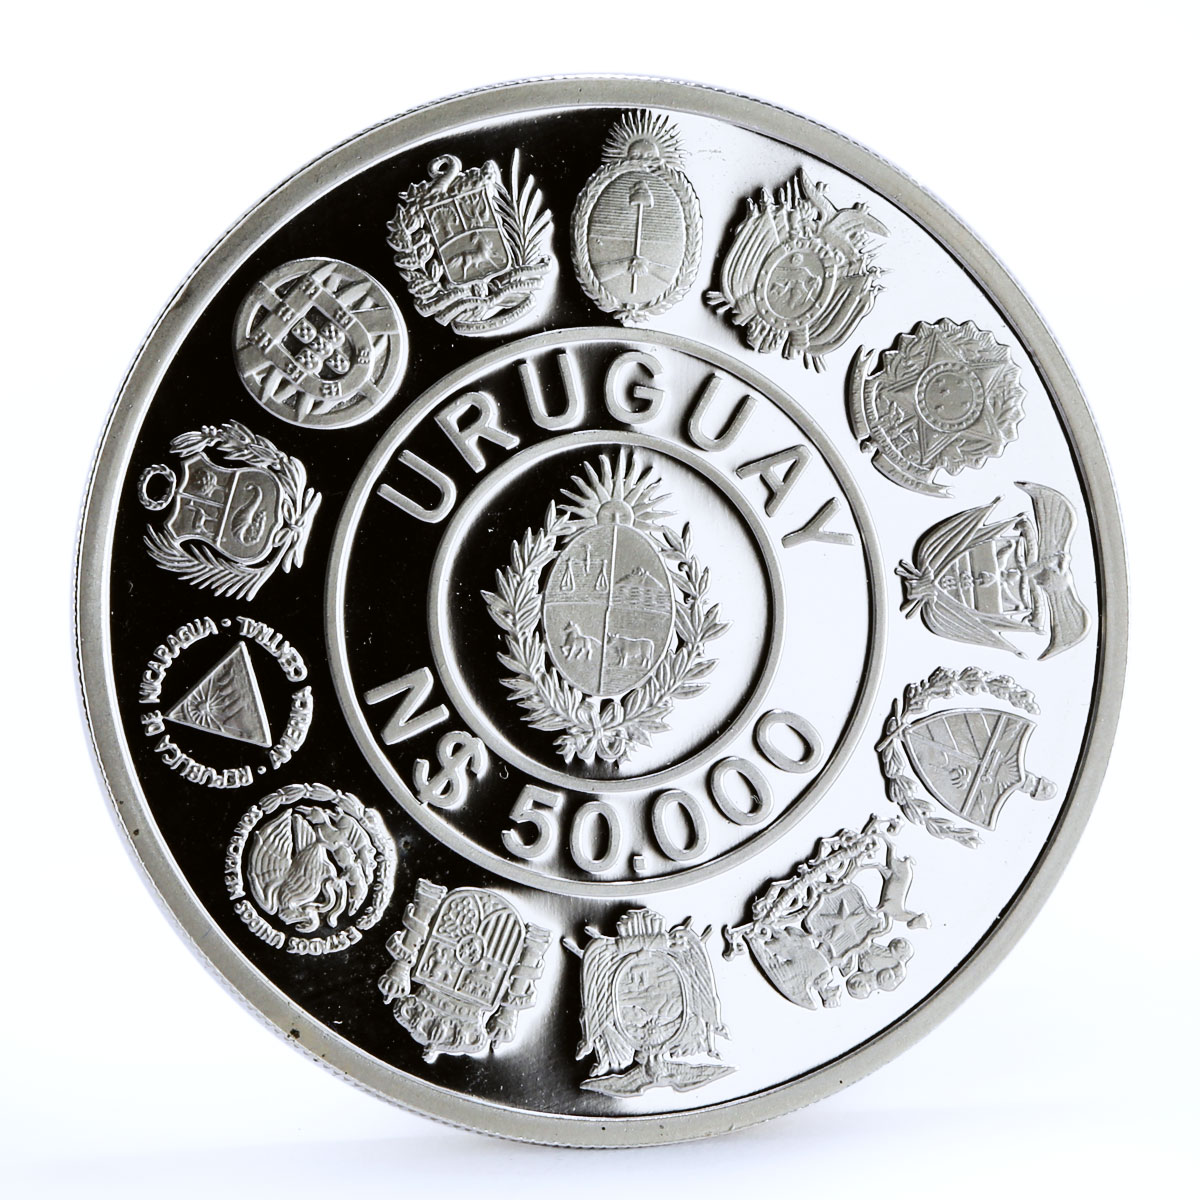 Uruguay 50000 pesos Ibero-American series Coat of Arms proof silver coin 1991